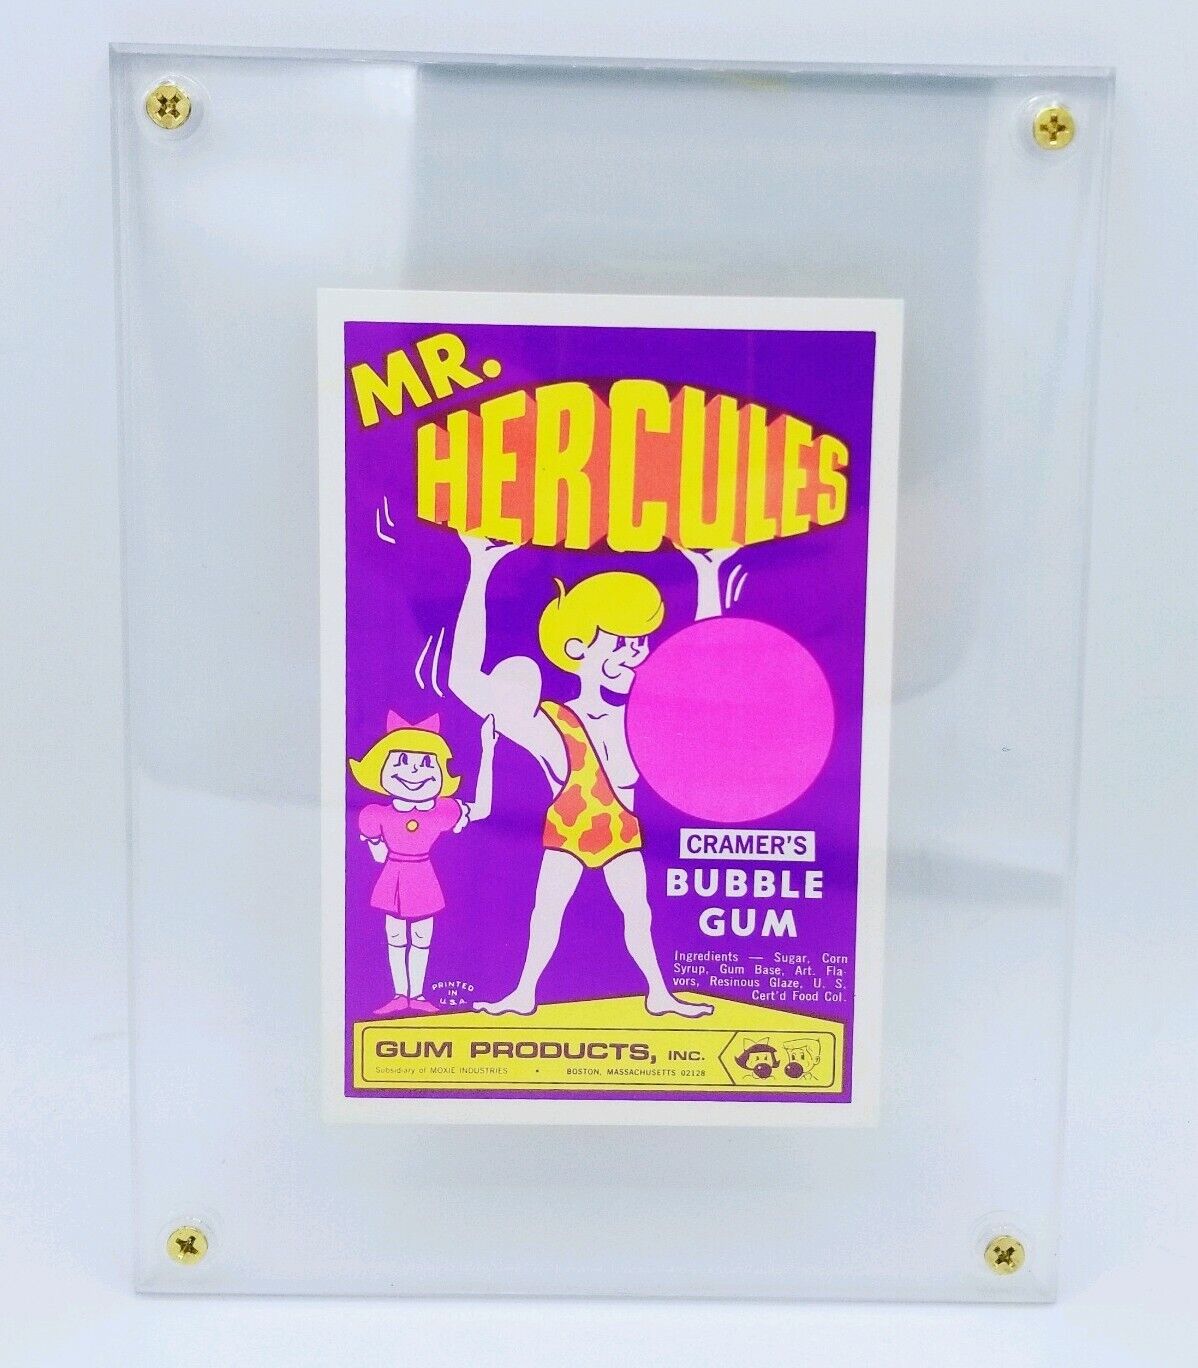 NOS Vintage Gumball Machine Display Card Mr. Hercules Bubble Gum 5 cent + Case